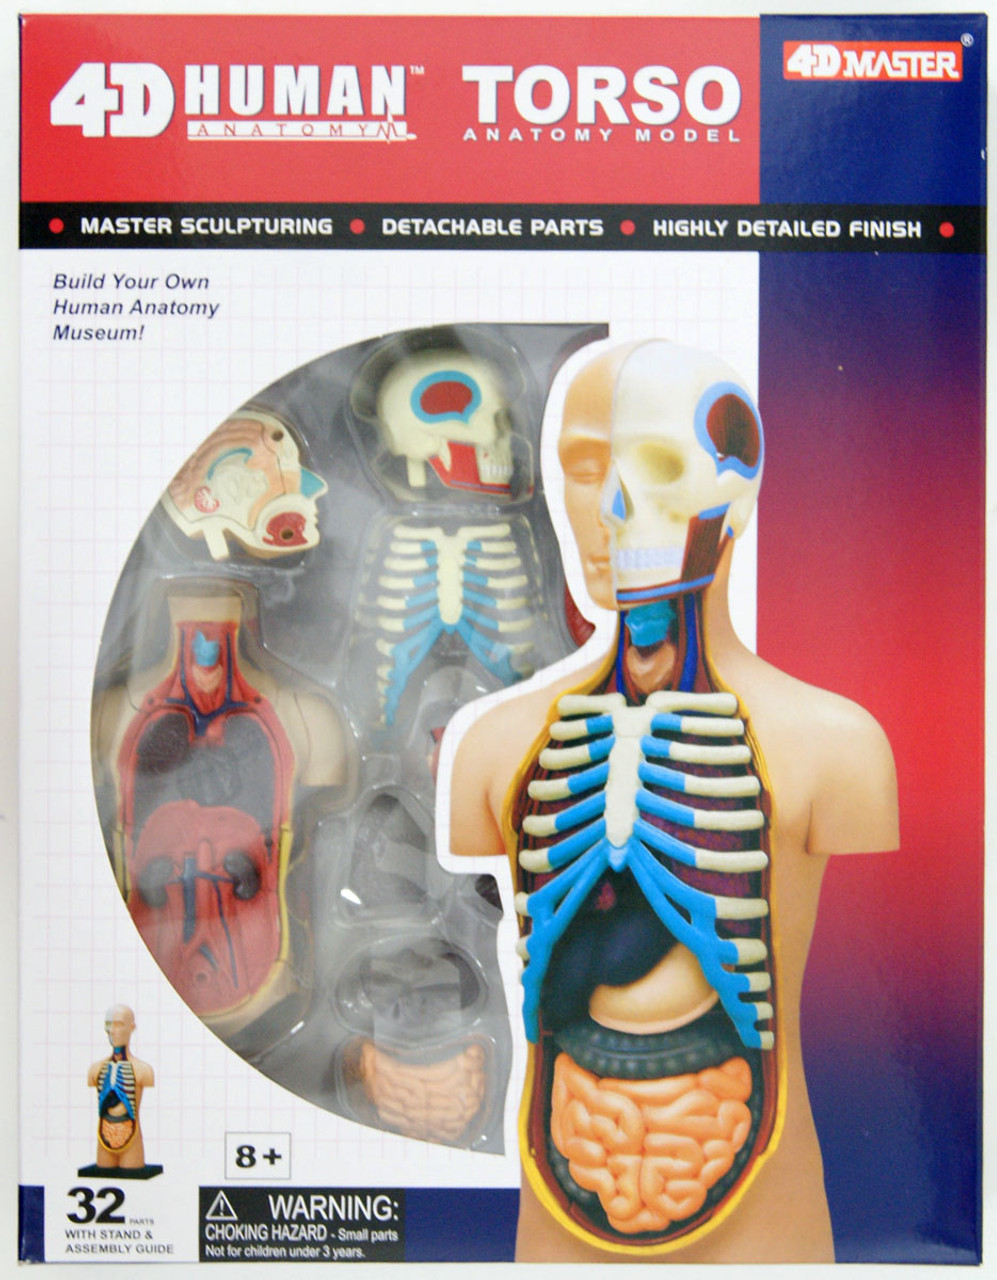 4D Master Vision Cat Skeleton & Anatomy Model Kit